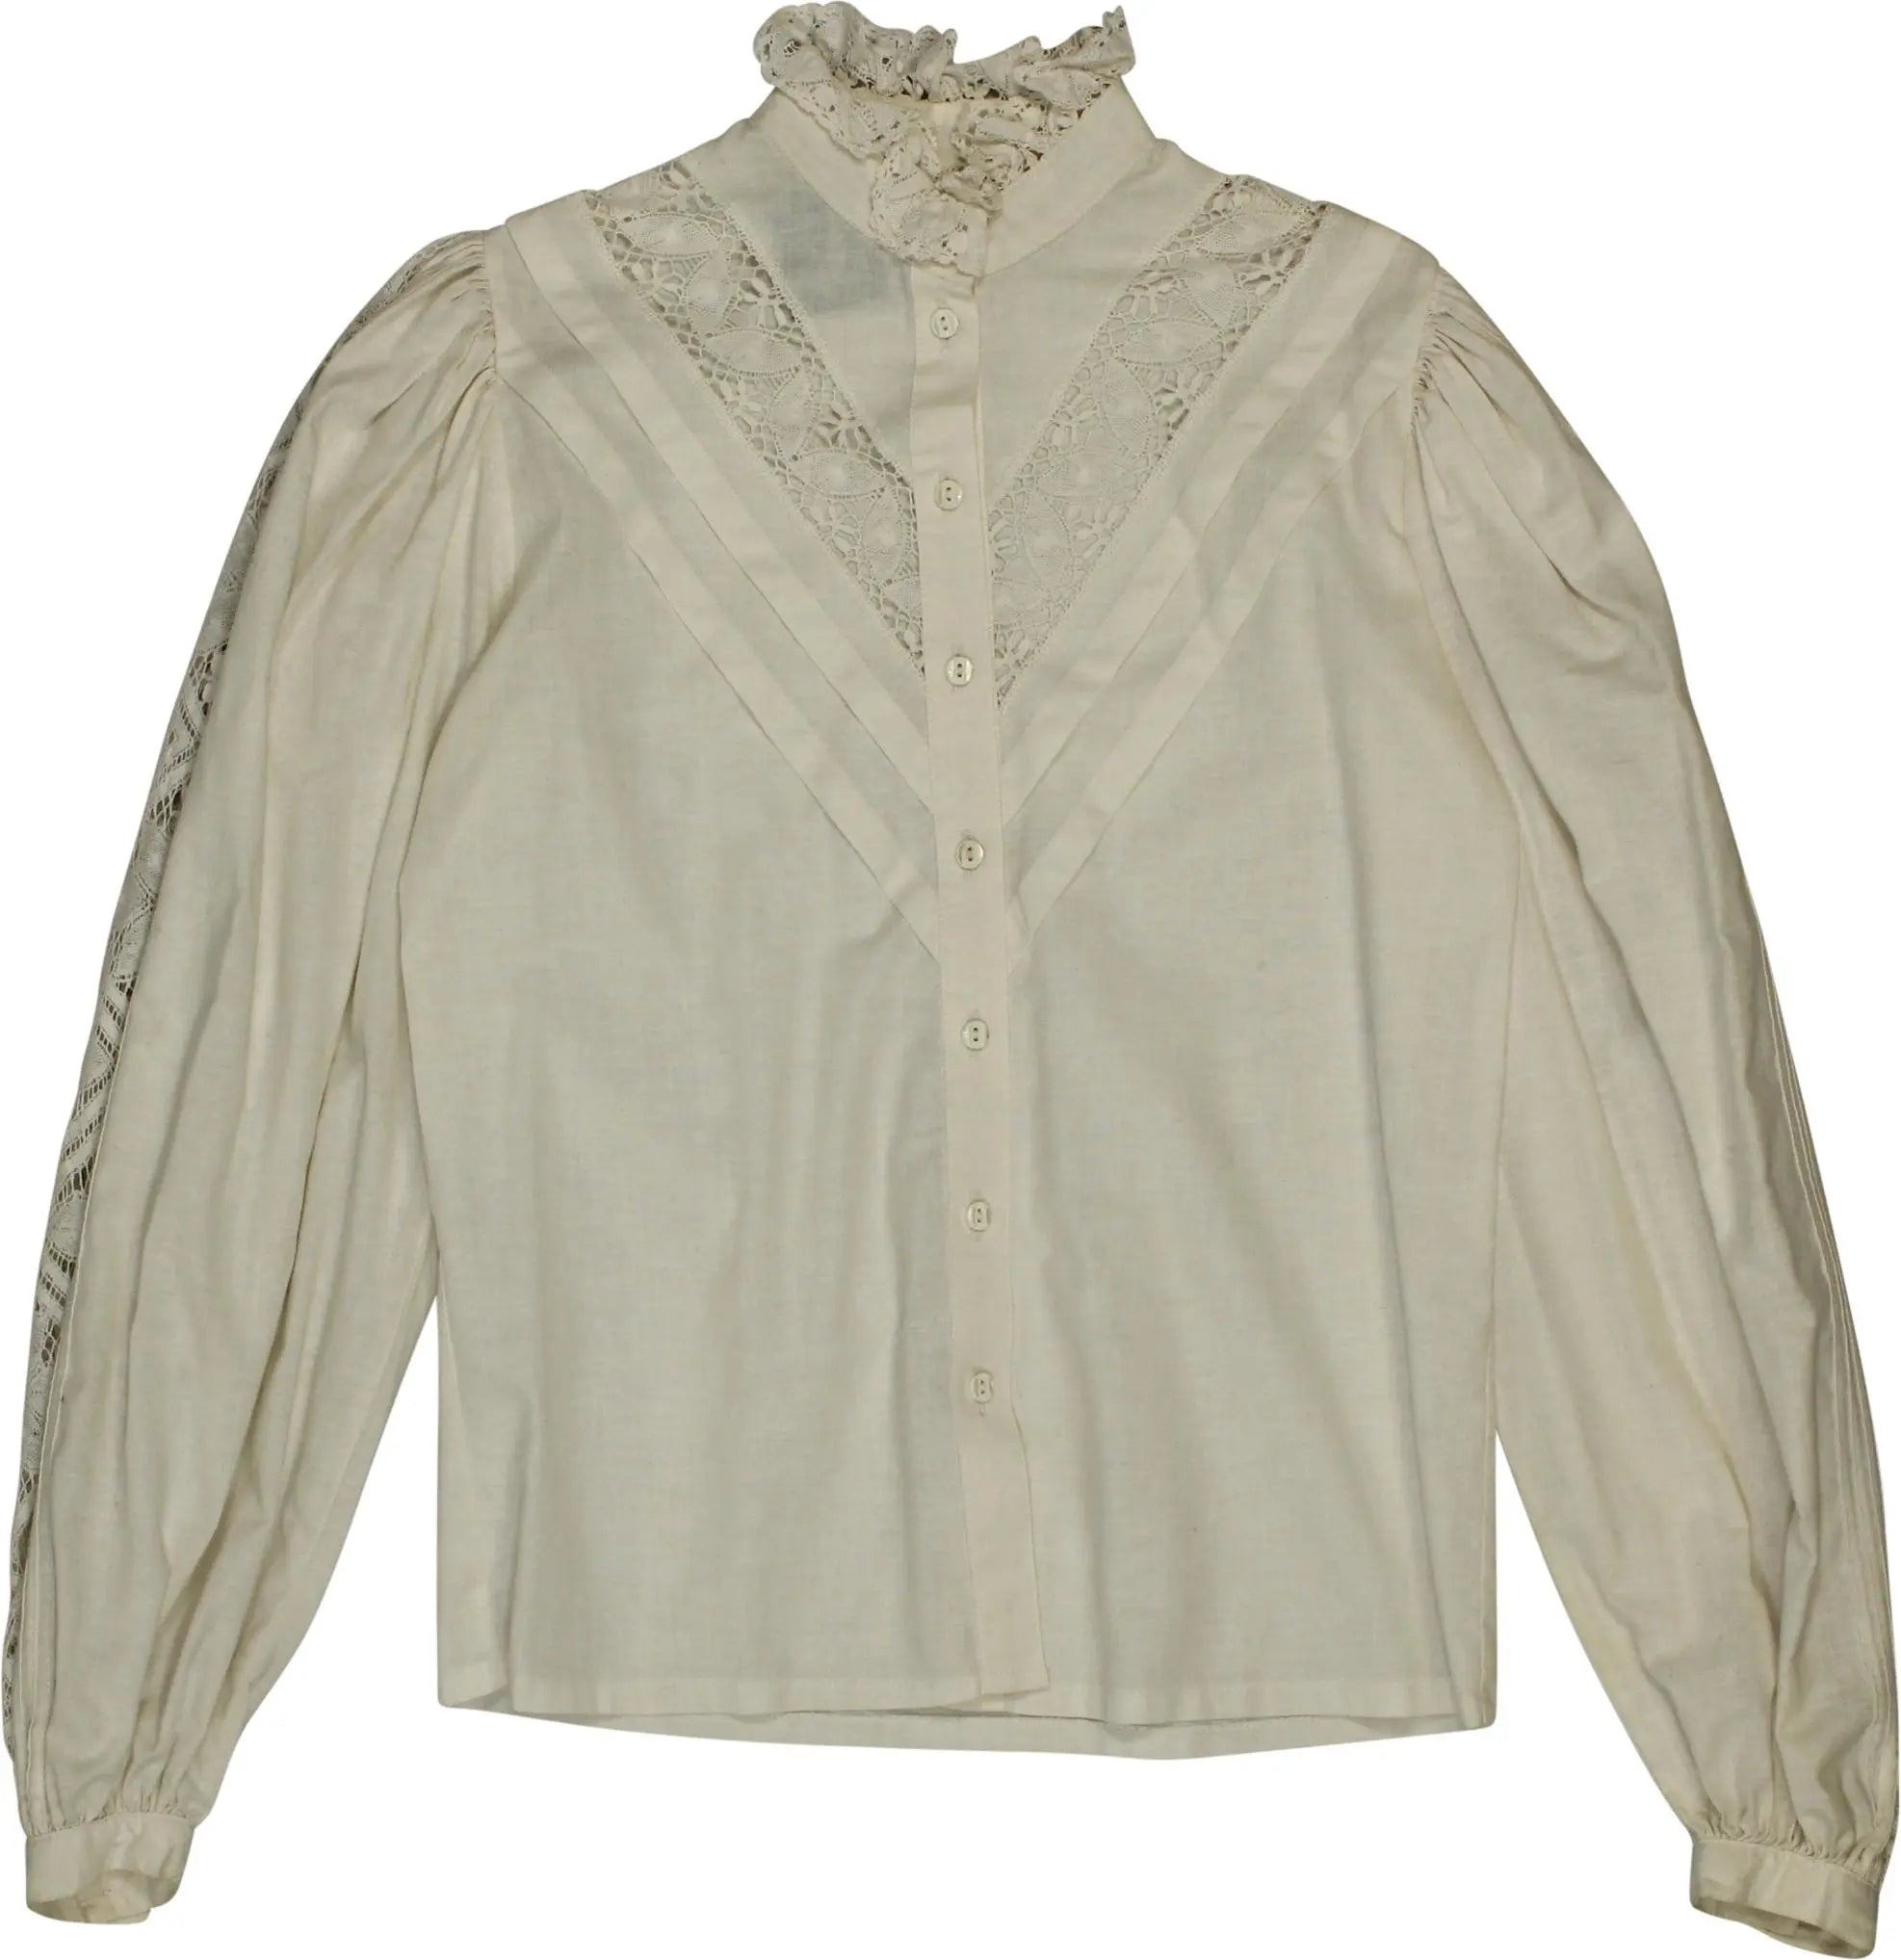 Huber Dirndl - Dirndl Shirt with Lace Details- ThriftTale.com - Vintage and second handclothing